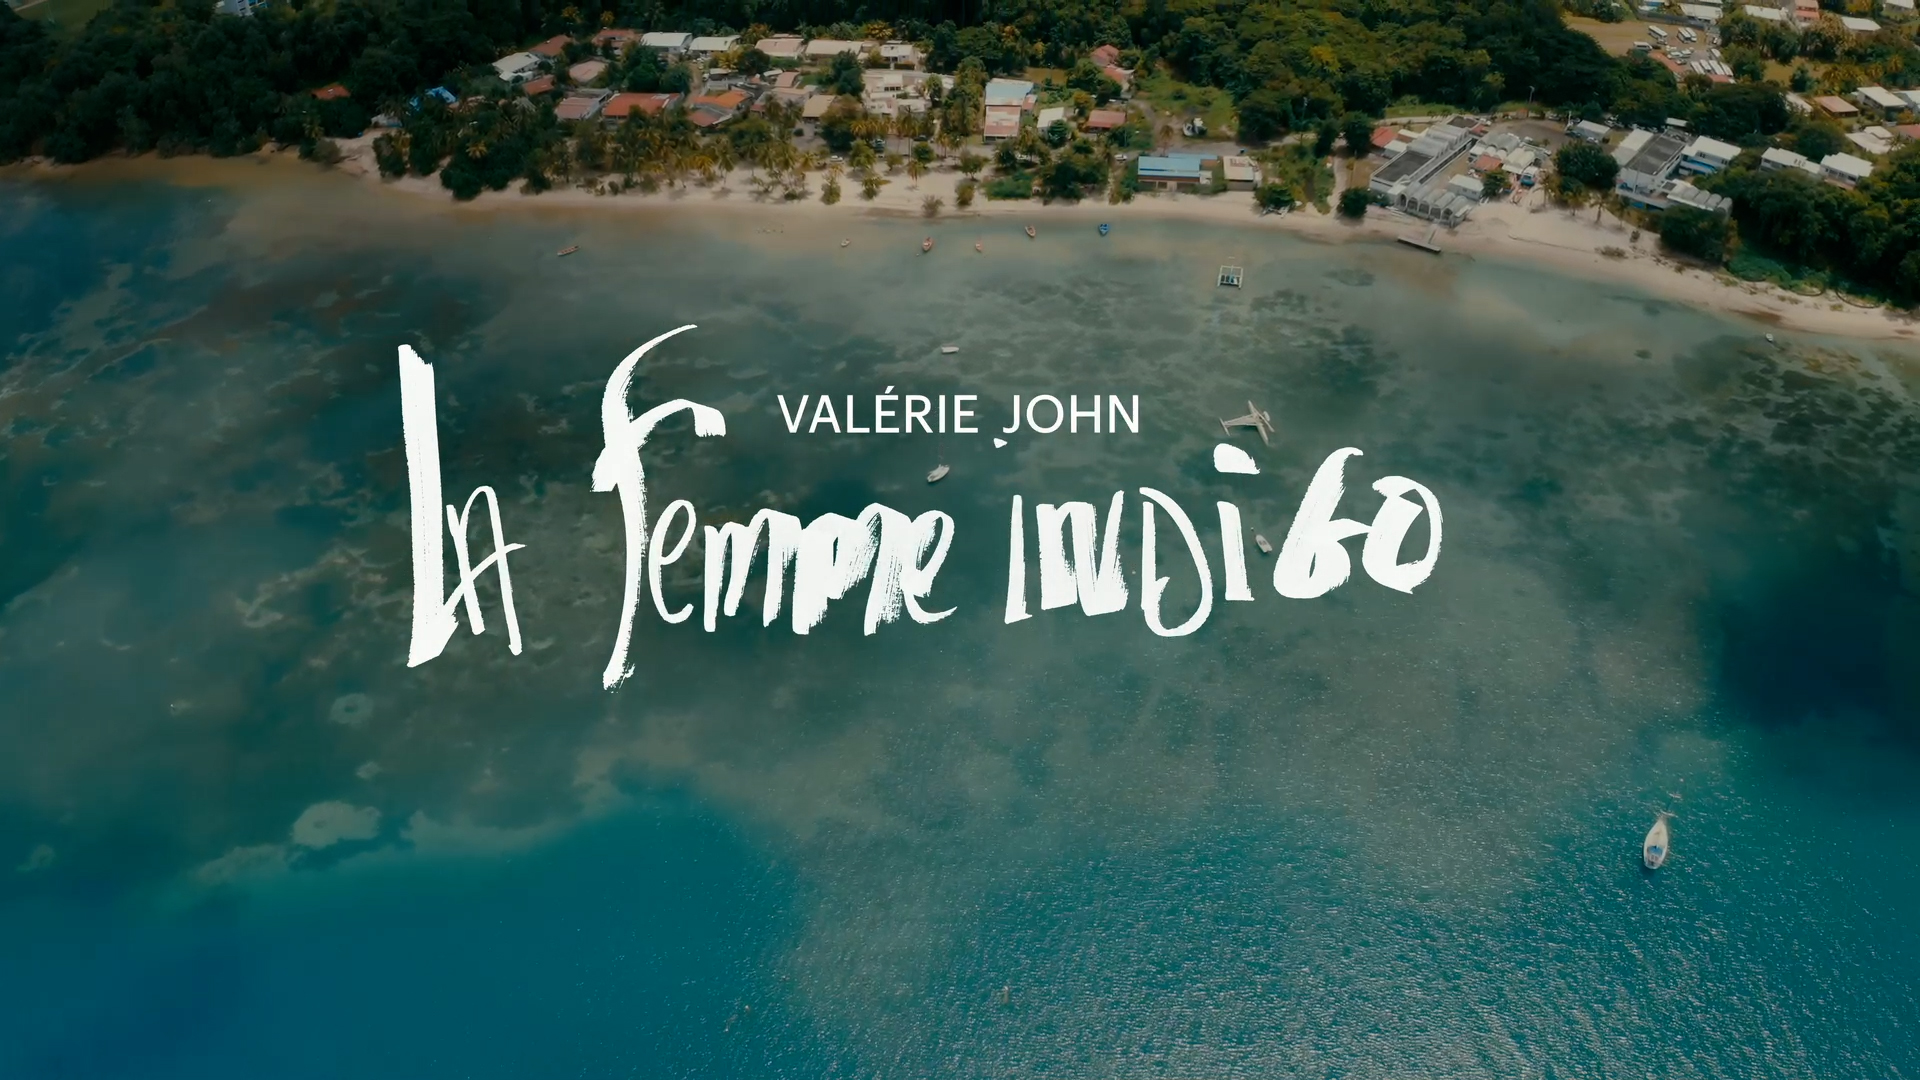 Valérie John, la femme indigo